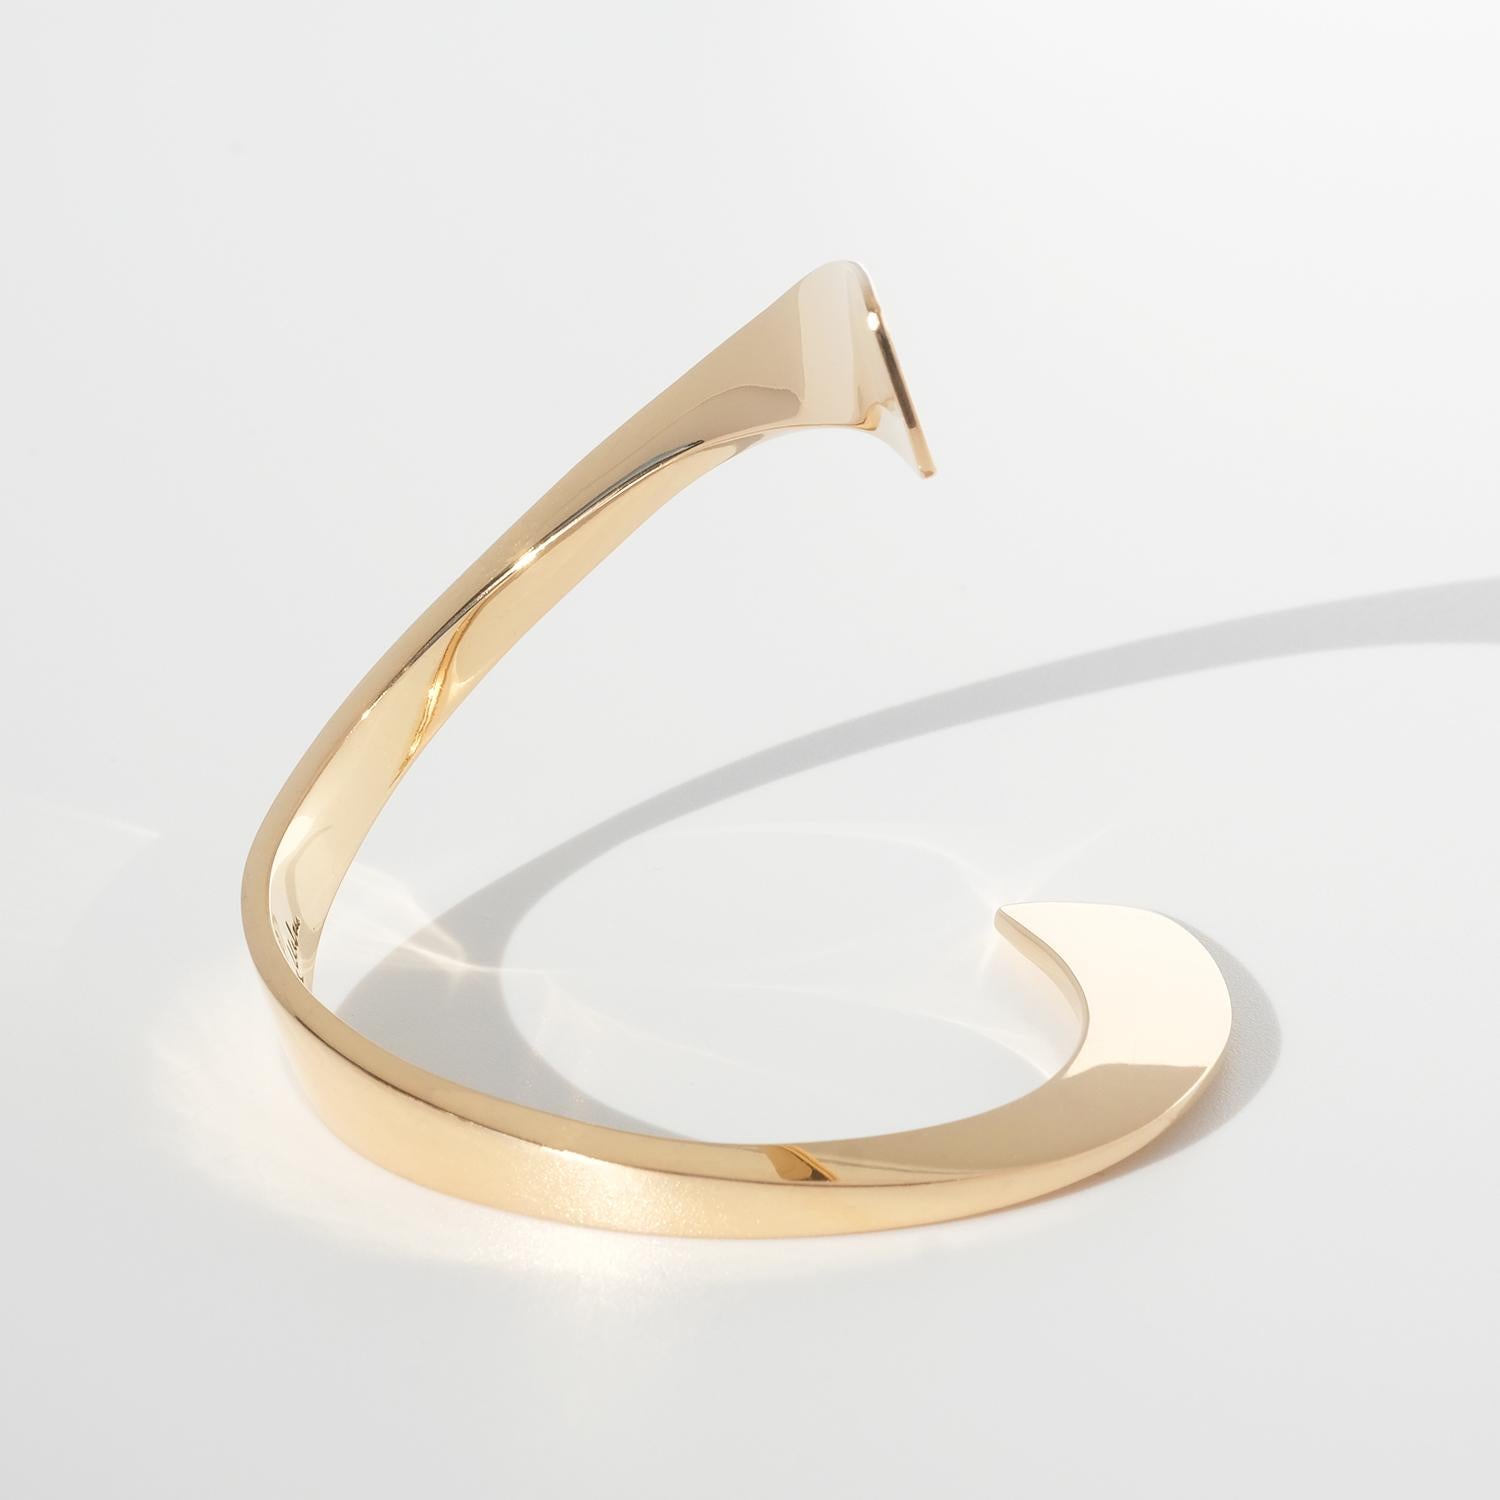 Women's Swedish gold bracelet by Rey Urban made 1965.